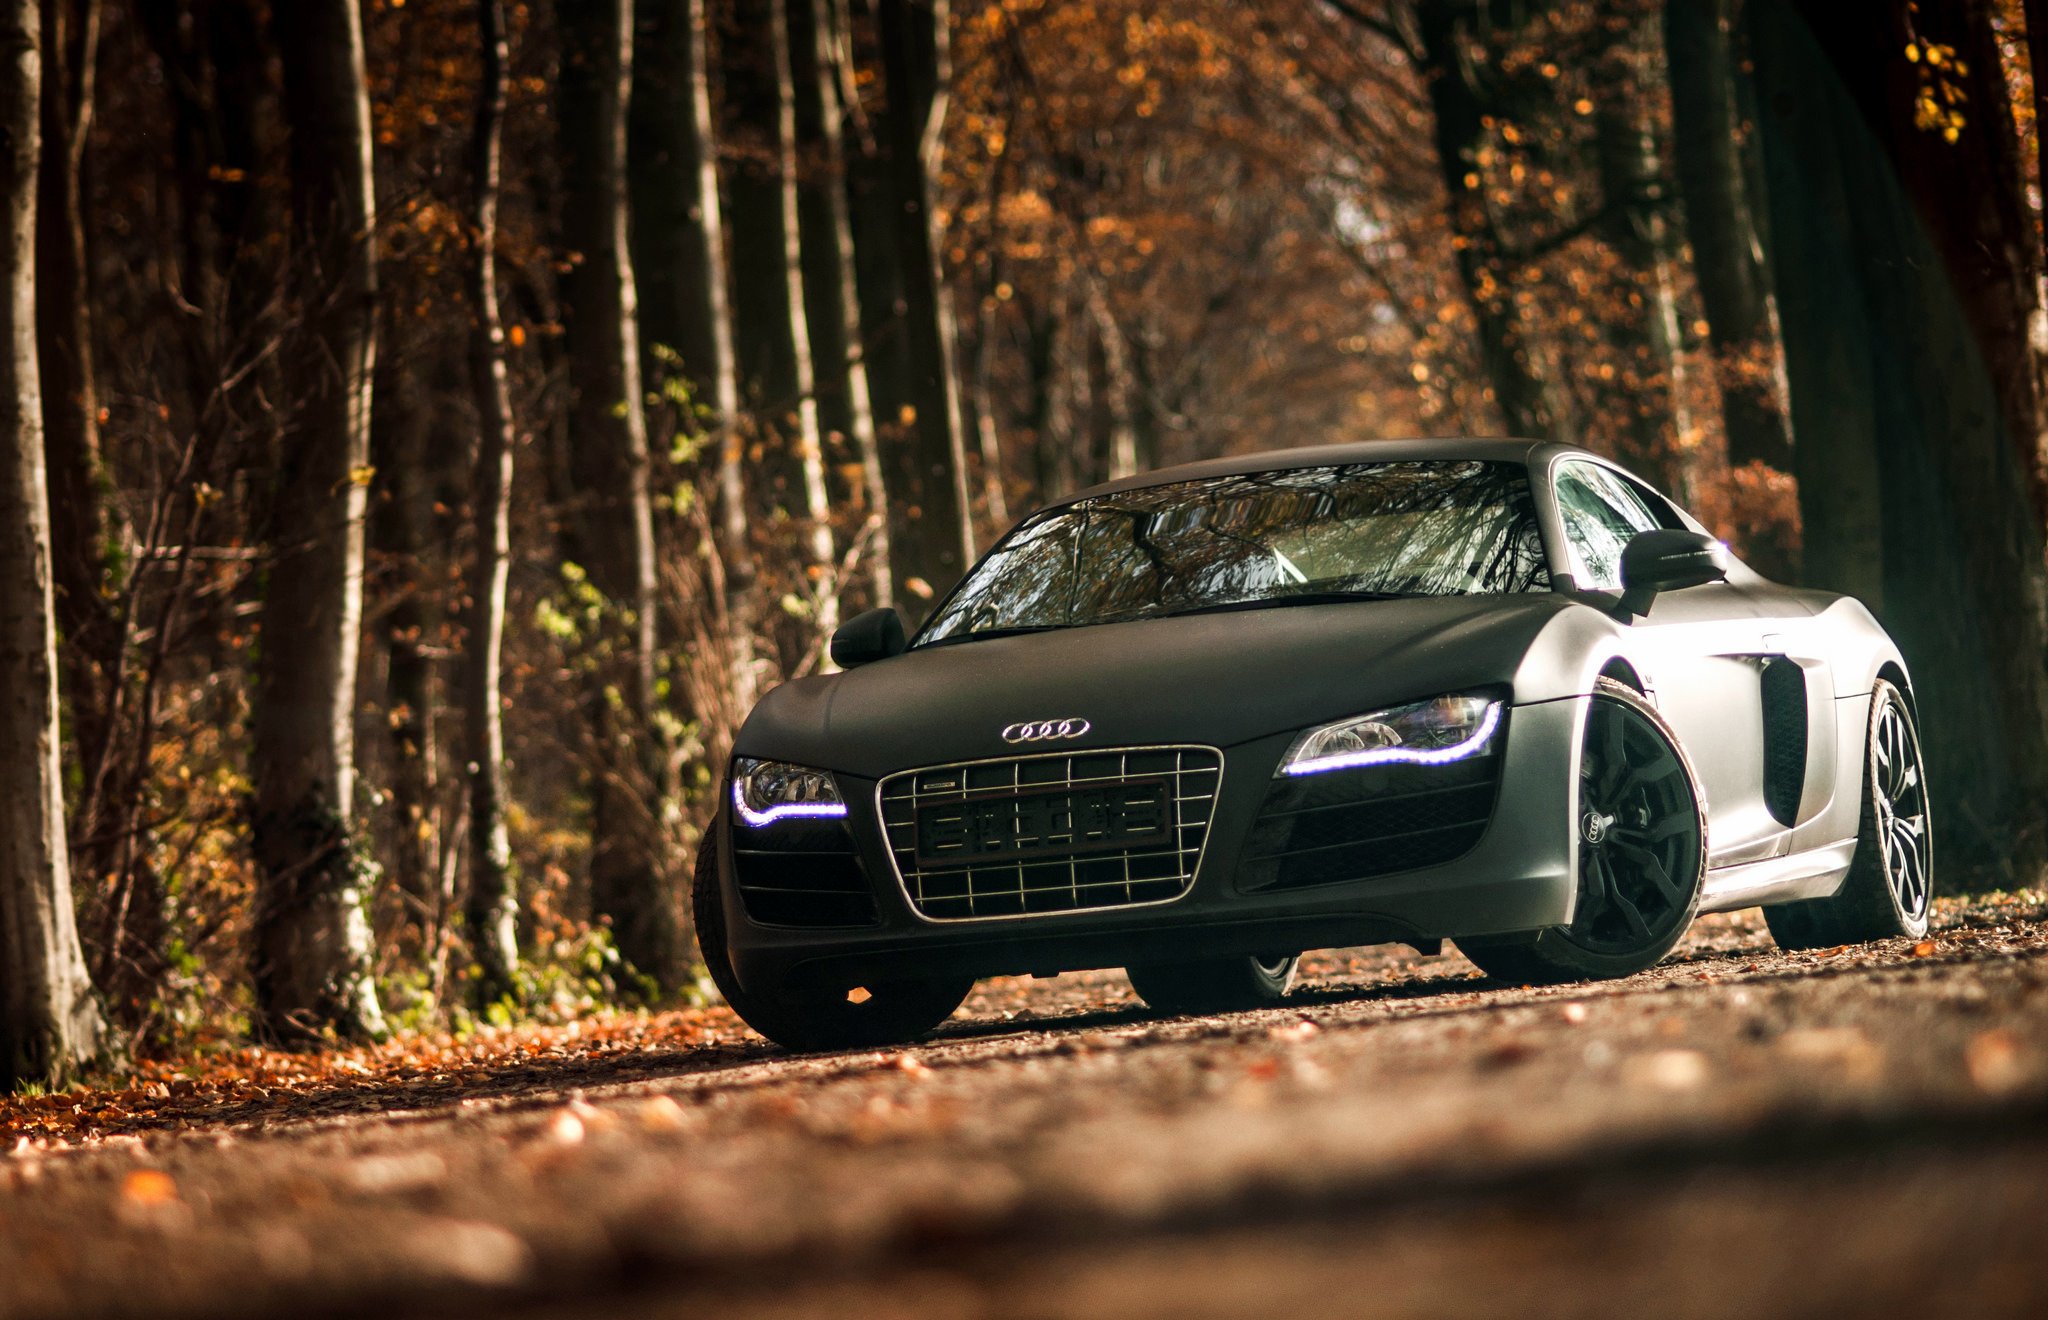 8 1024 10. Audi r8 1920 1080. Ауди р8 в лесу. Audi r8 v10 2020 Black. Audi r8 Full Black.